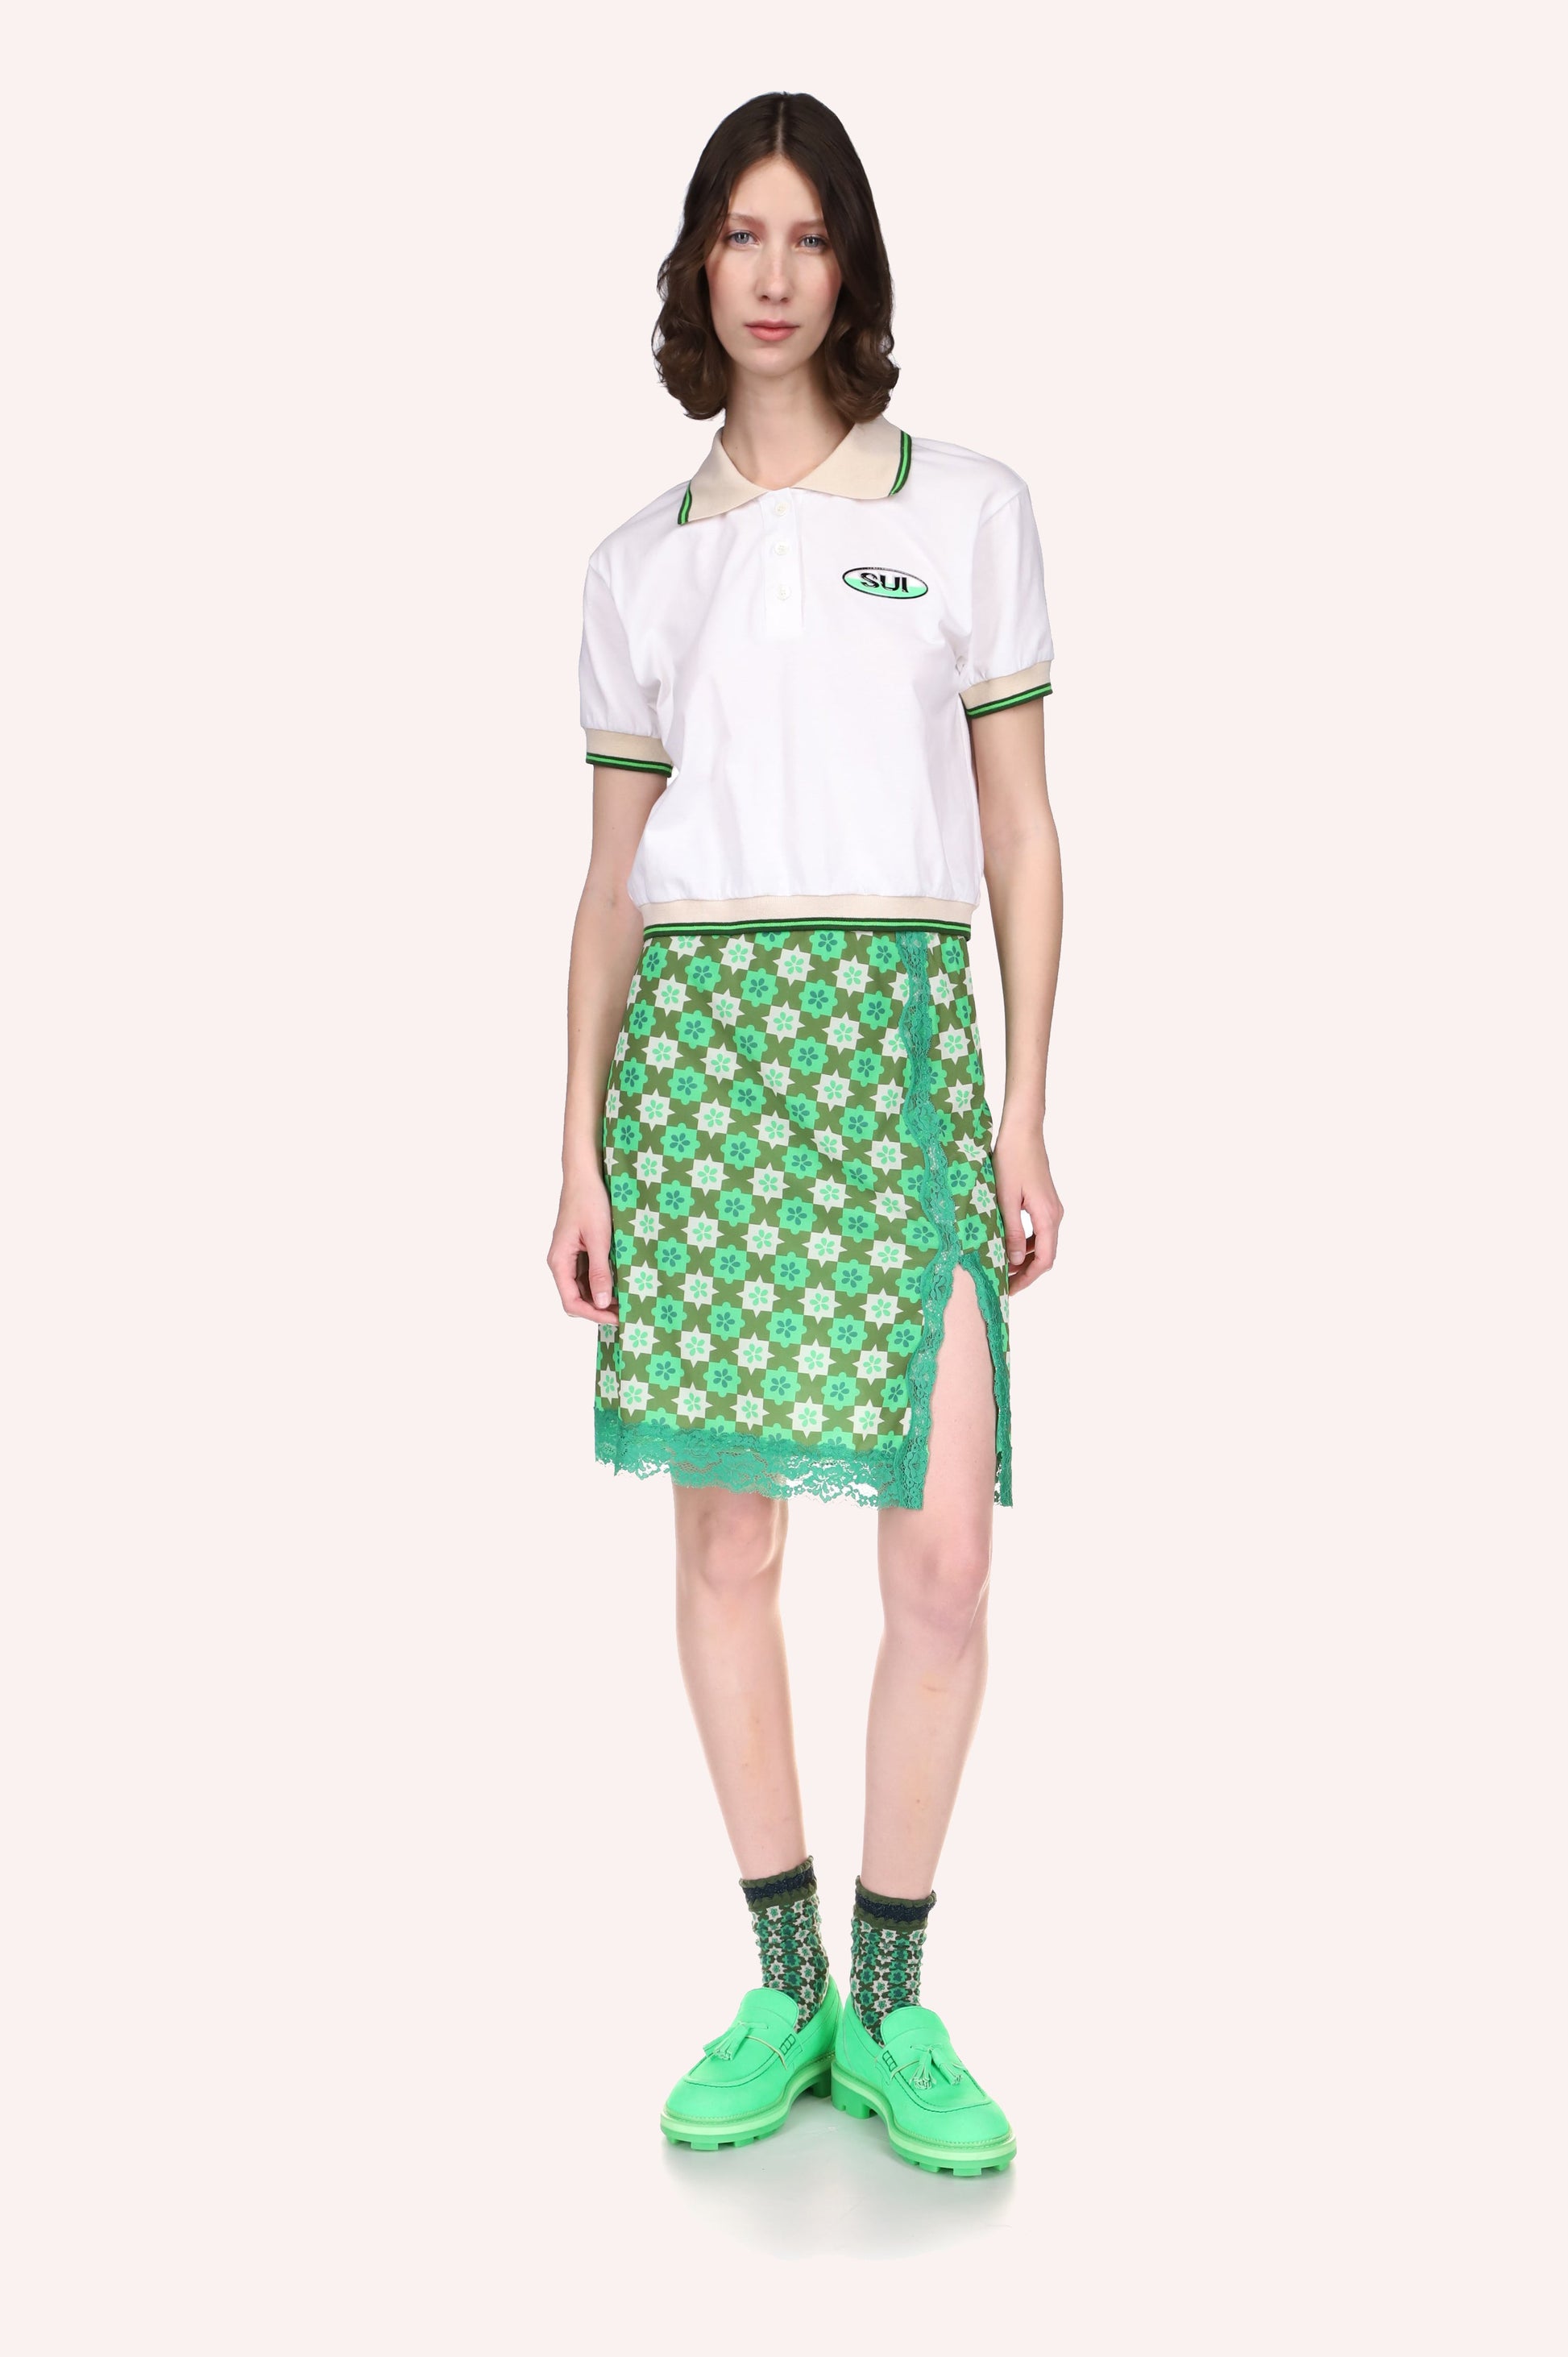 Le tee-shirt Polo Deco Neon Green est parfaitement assorti à la jupe Utopian Gingham Mesh Skirt Glo Green.